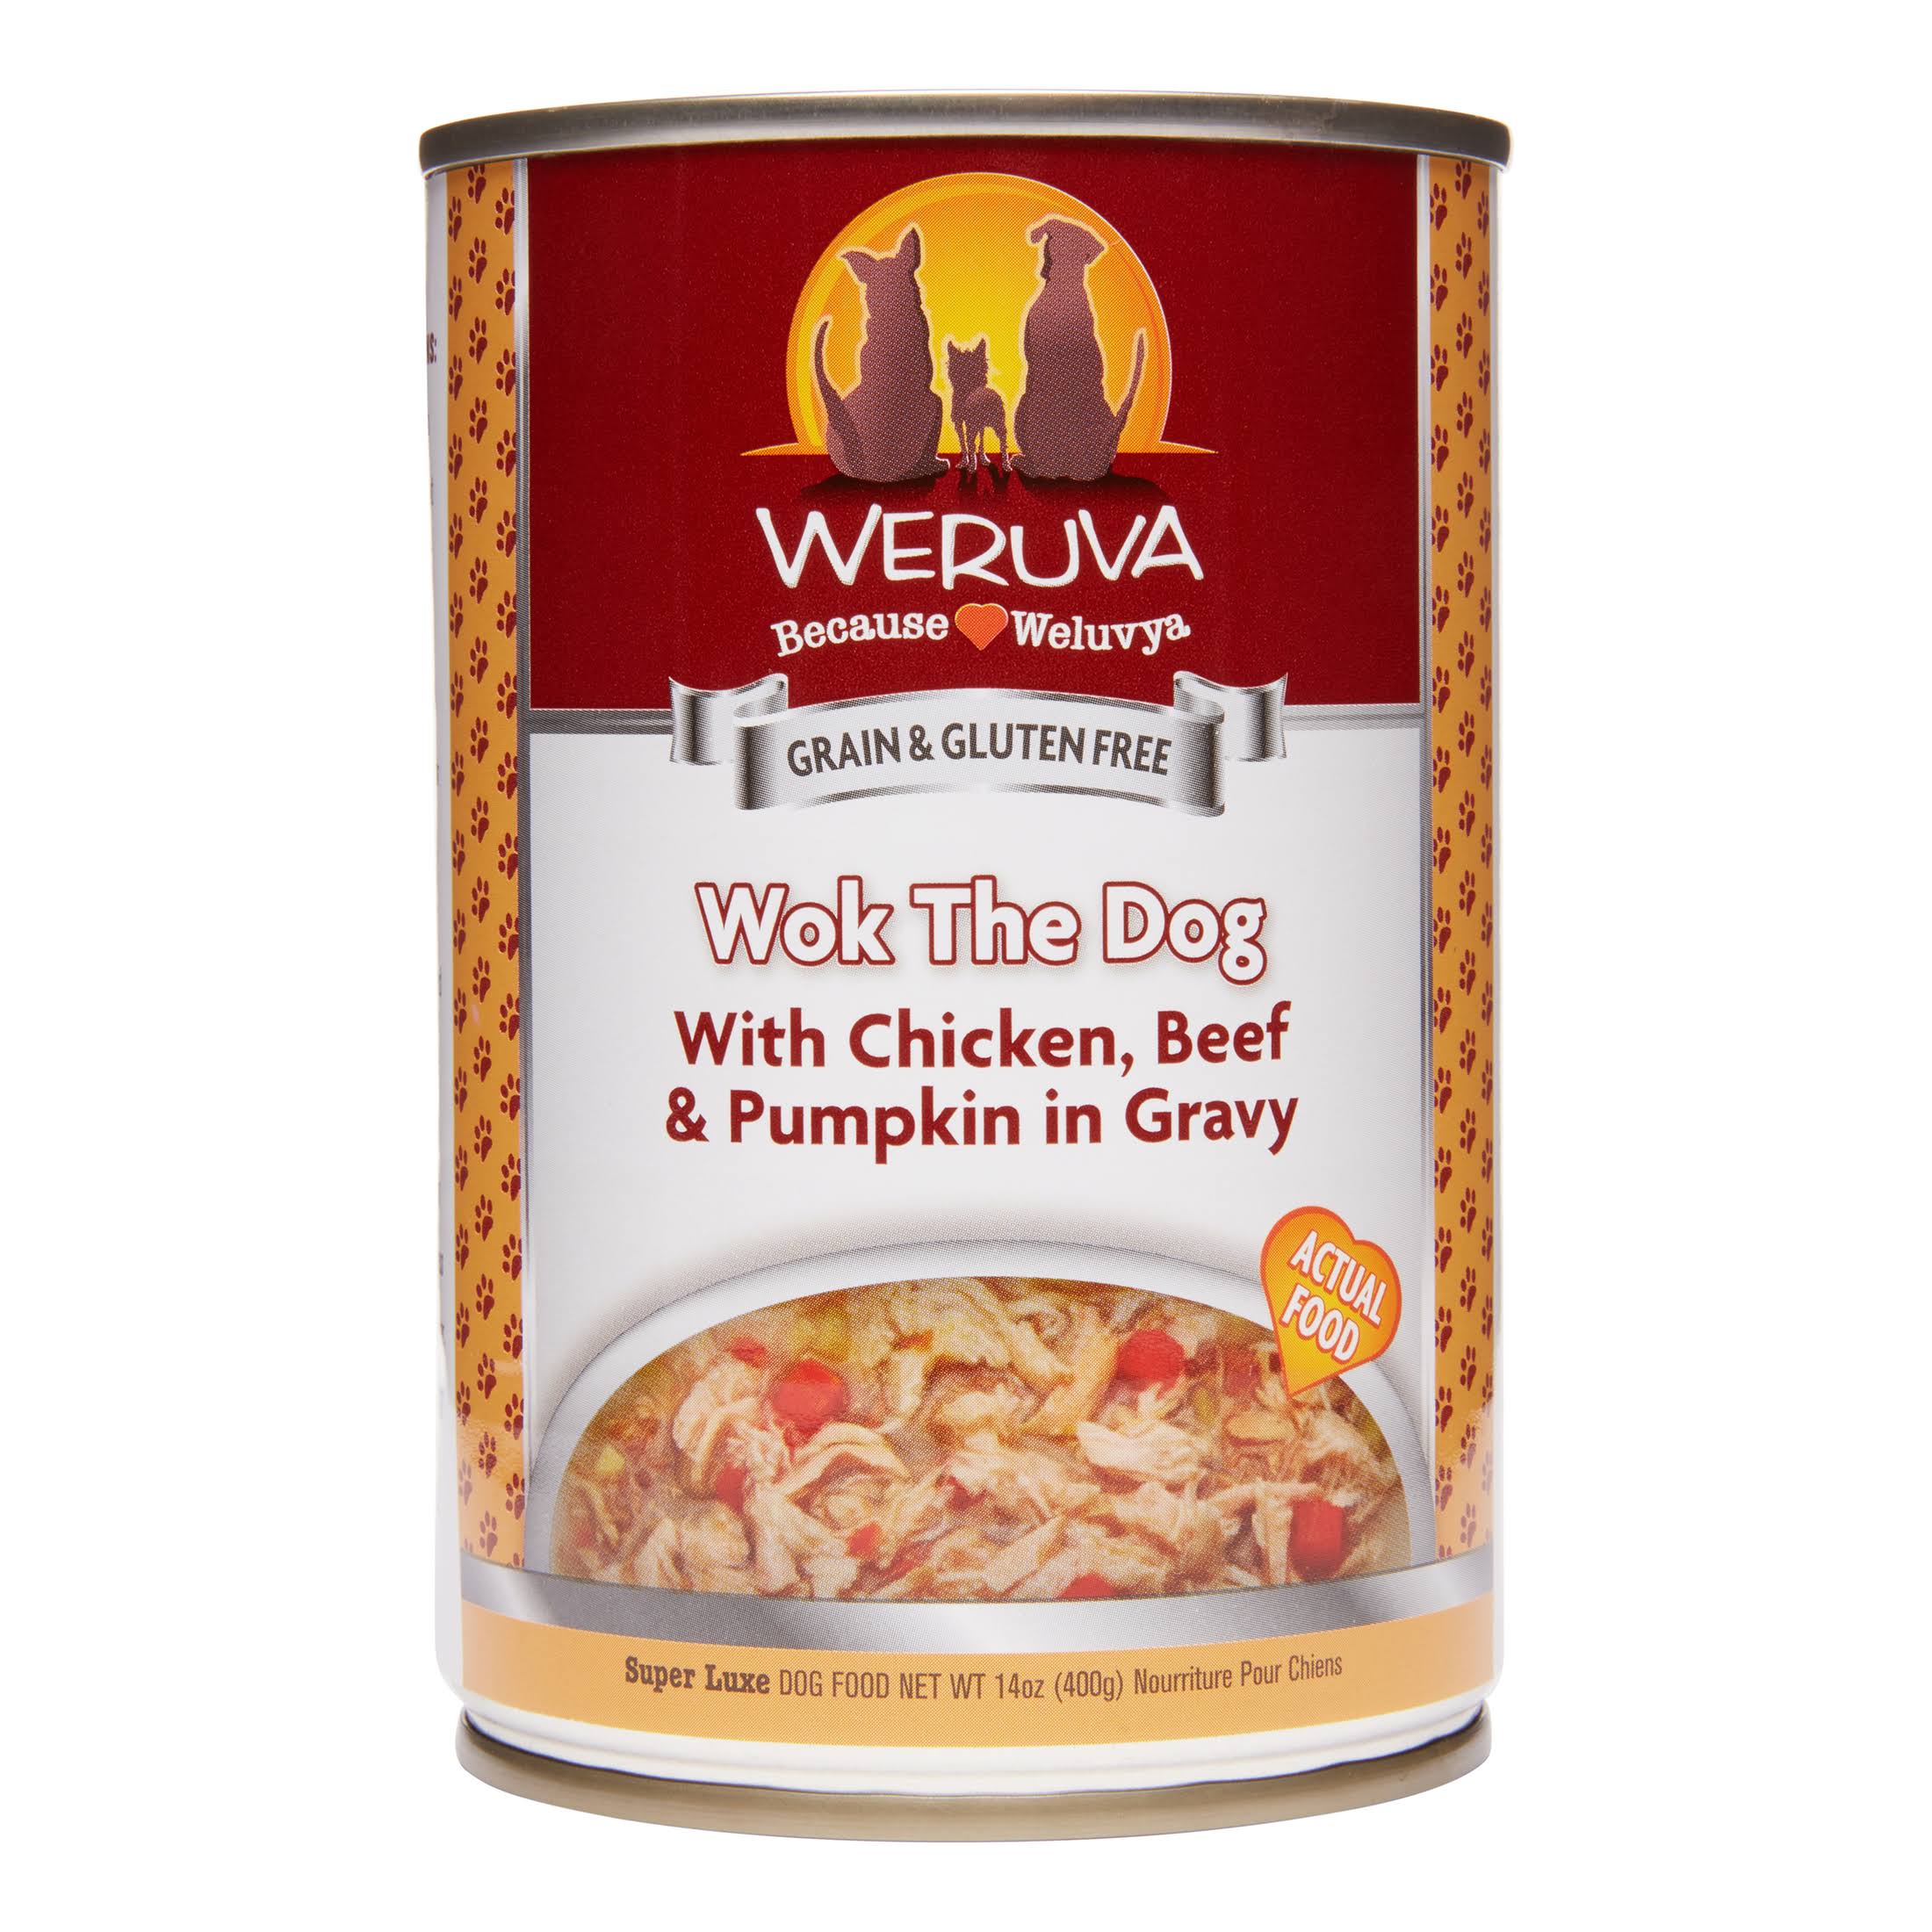 Weruva Grain-Free Canned Dog Food - Wok the Dog